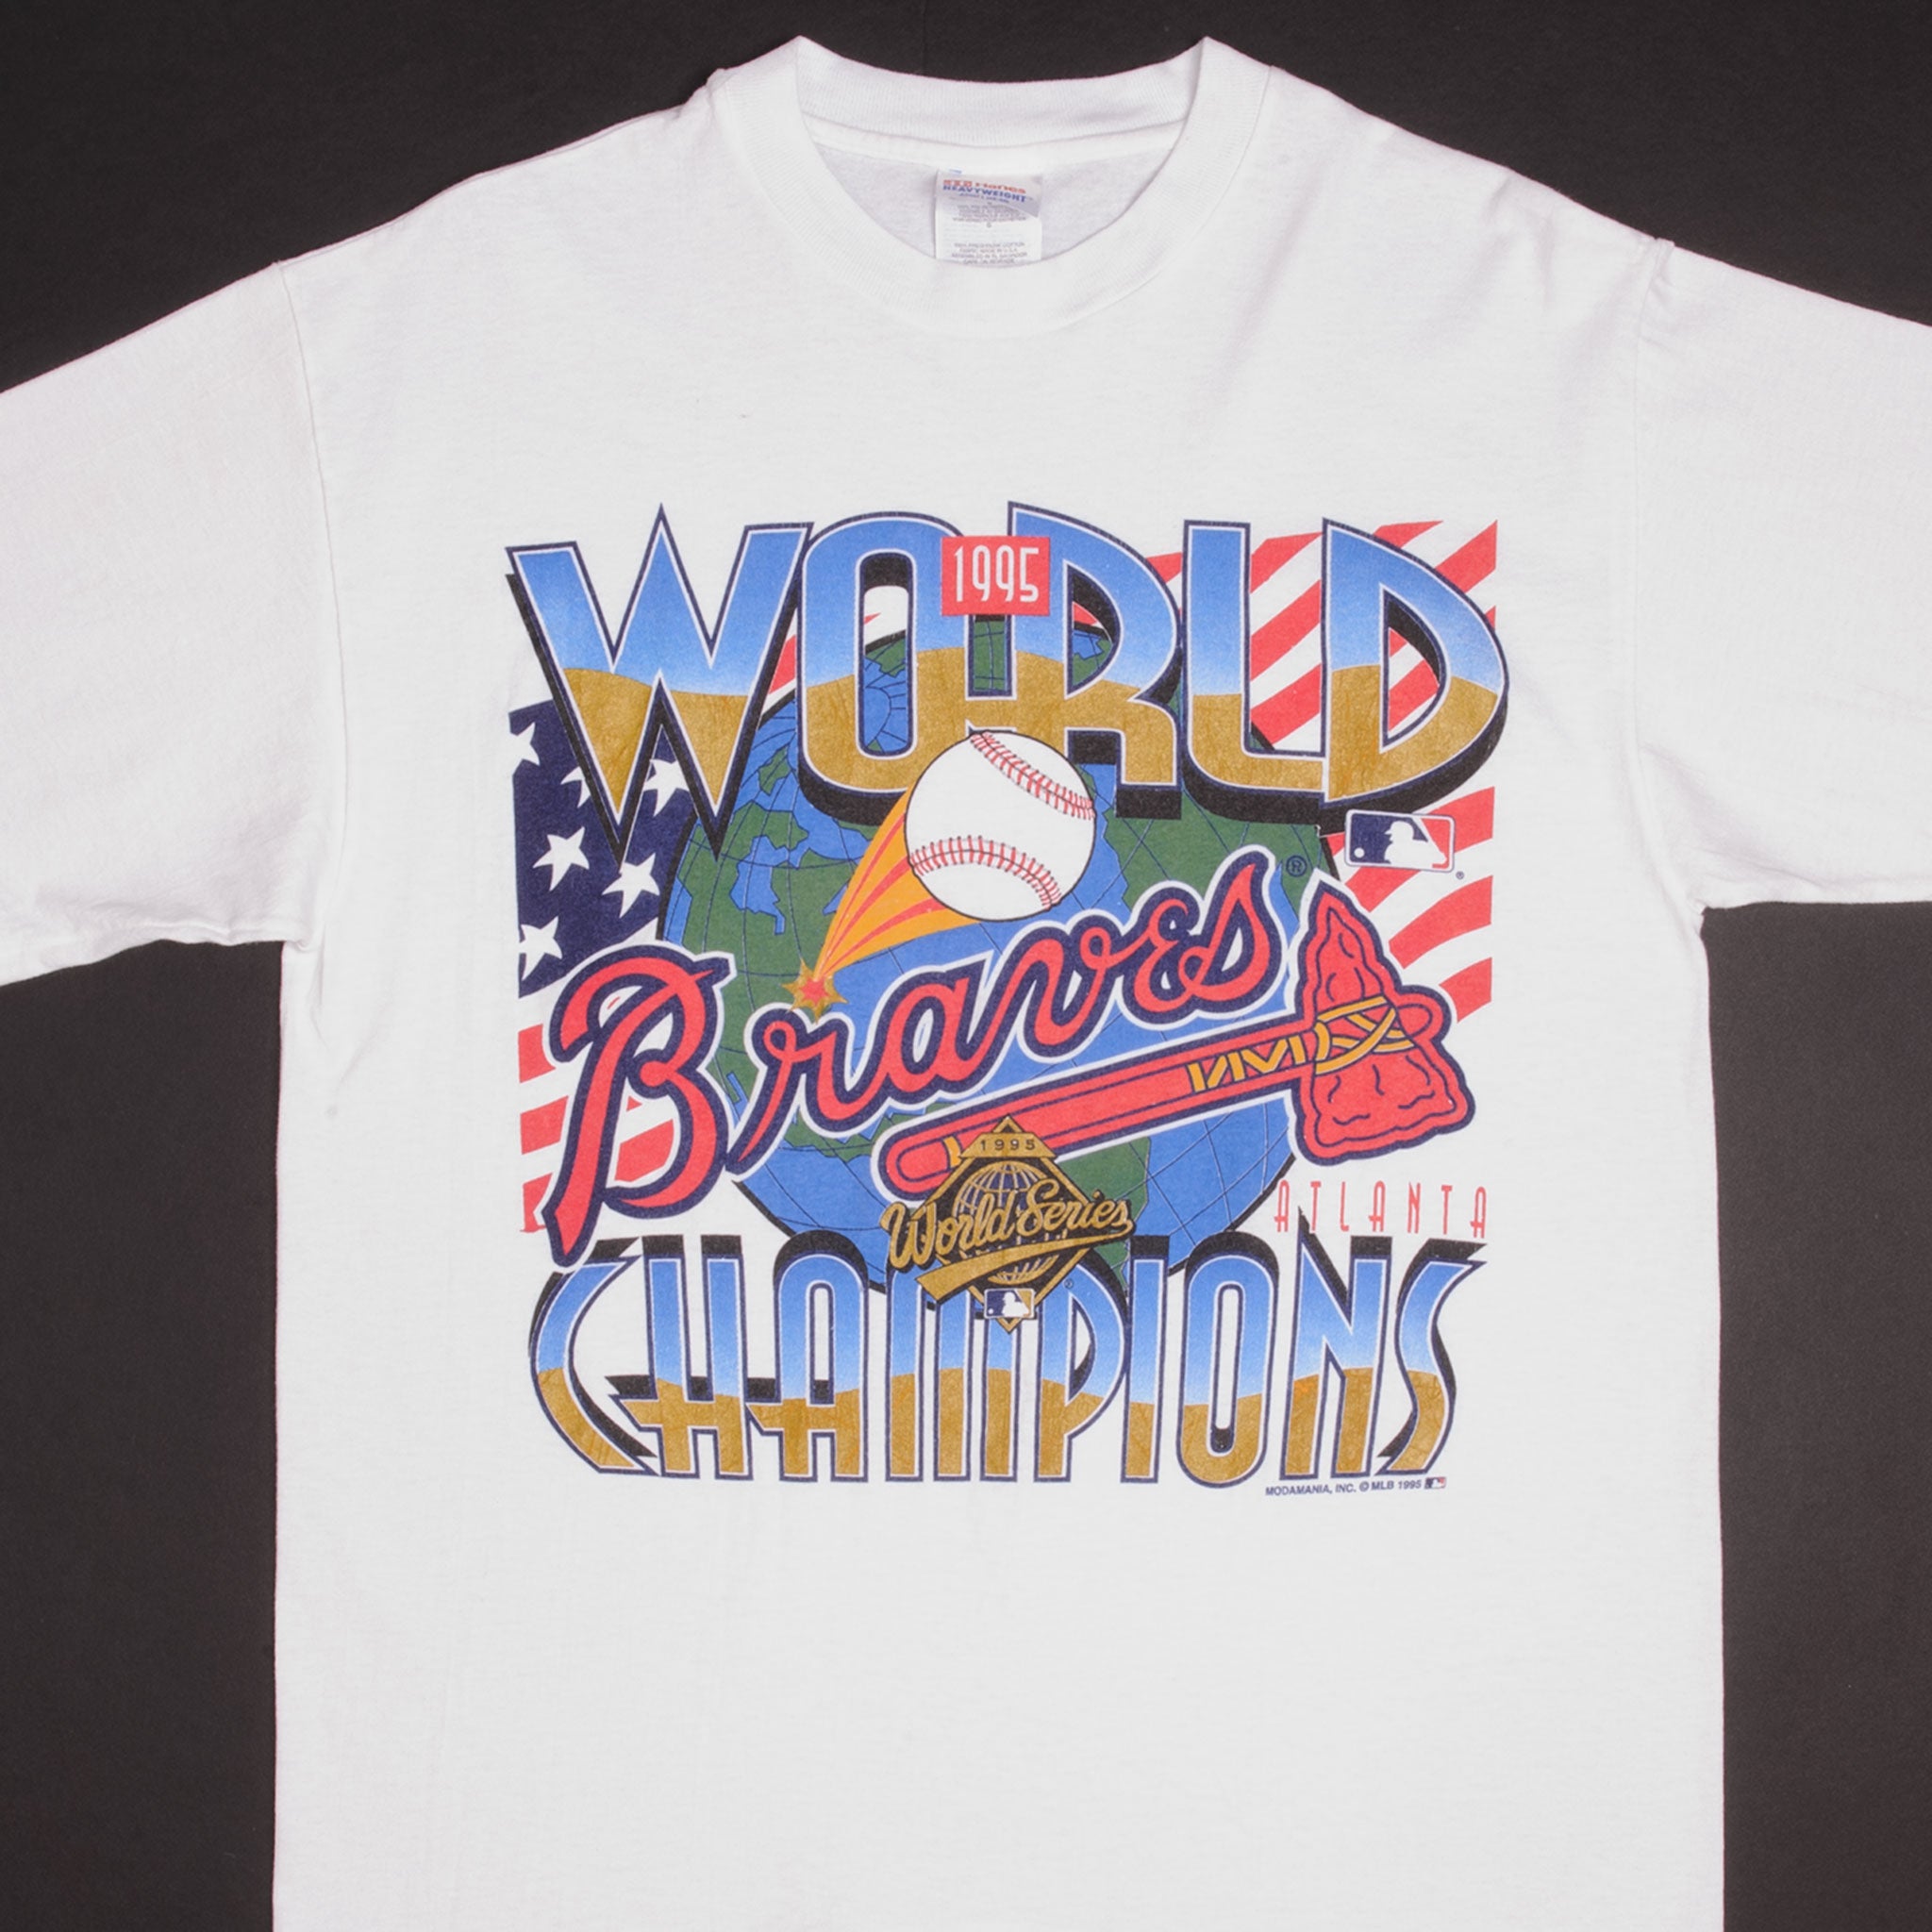 Atlanta Braves 1995 World Series Champi0ns MLB Shirt Vintage Men